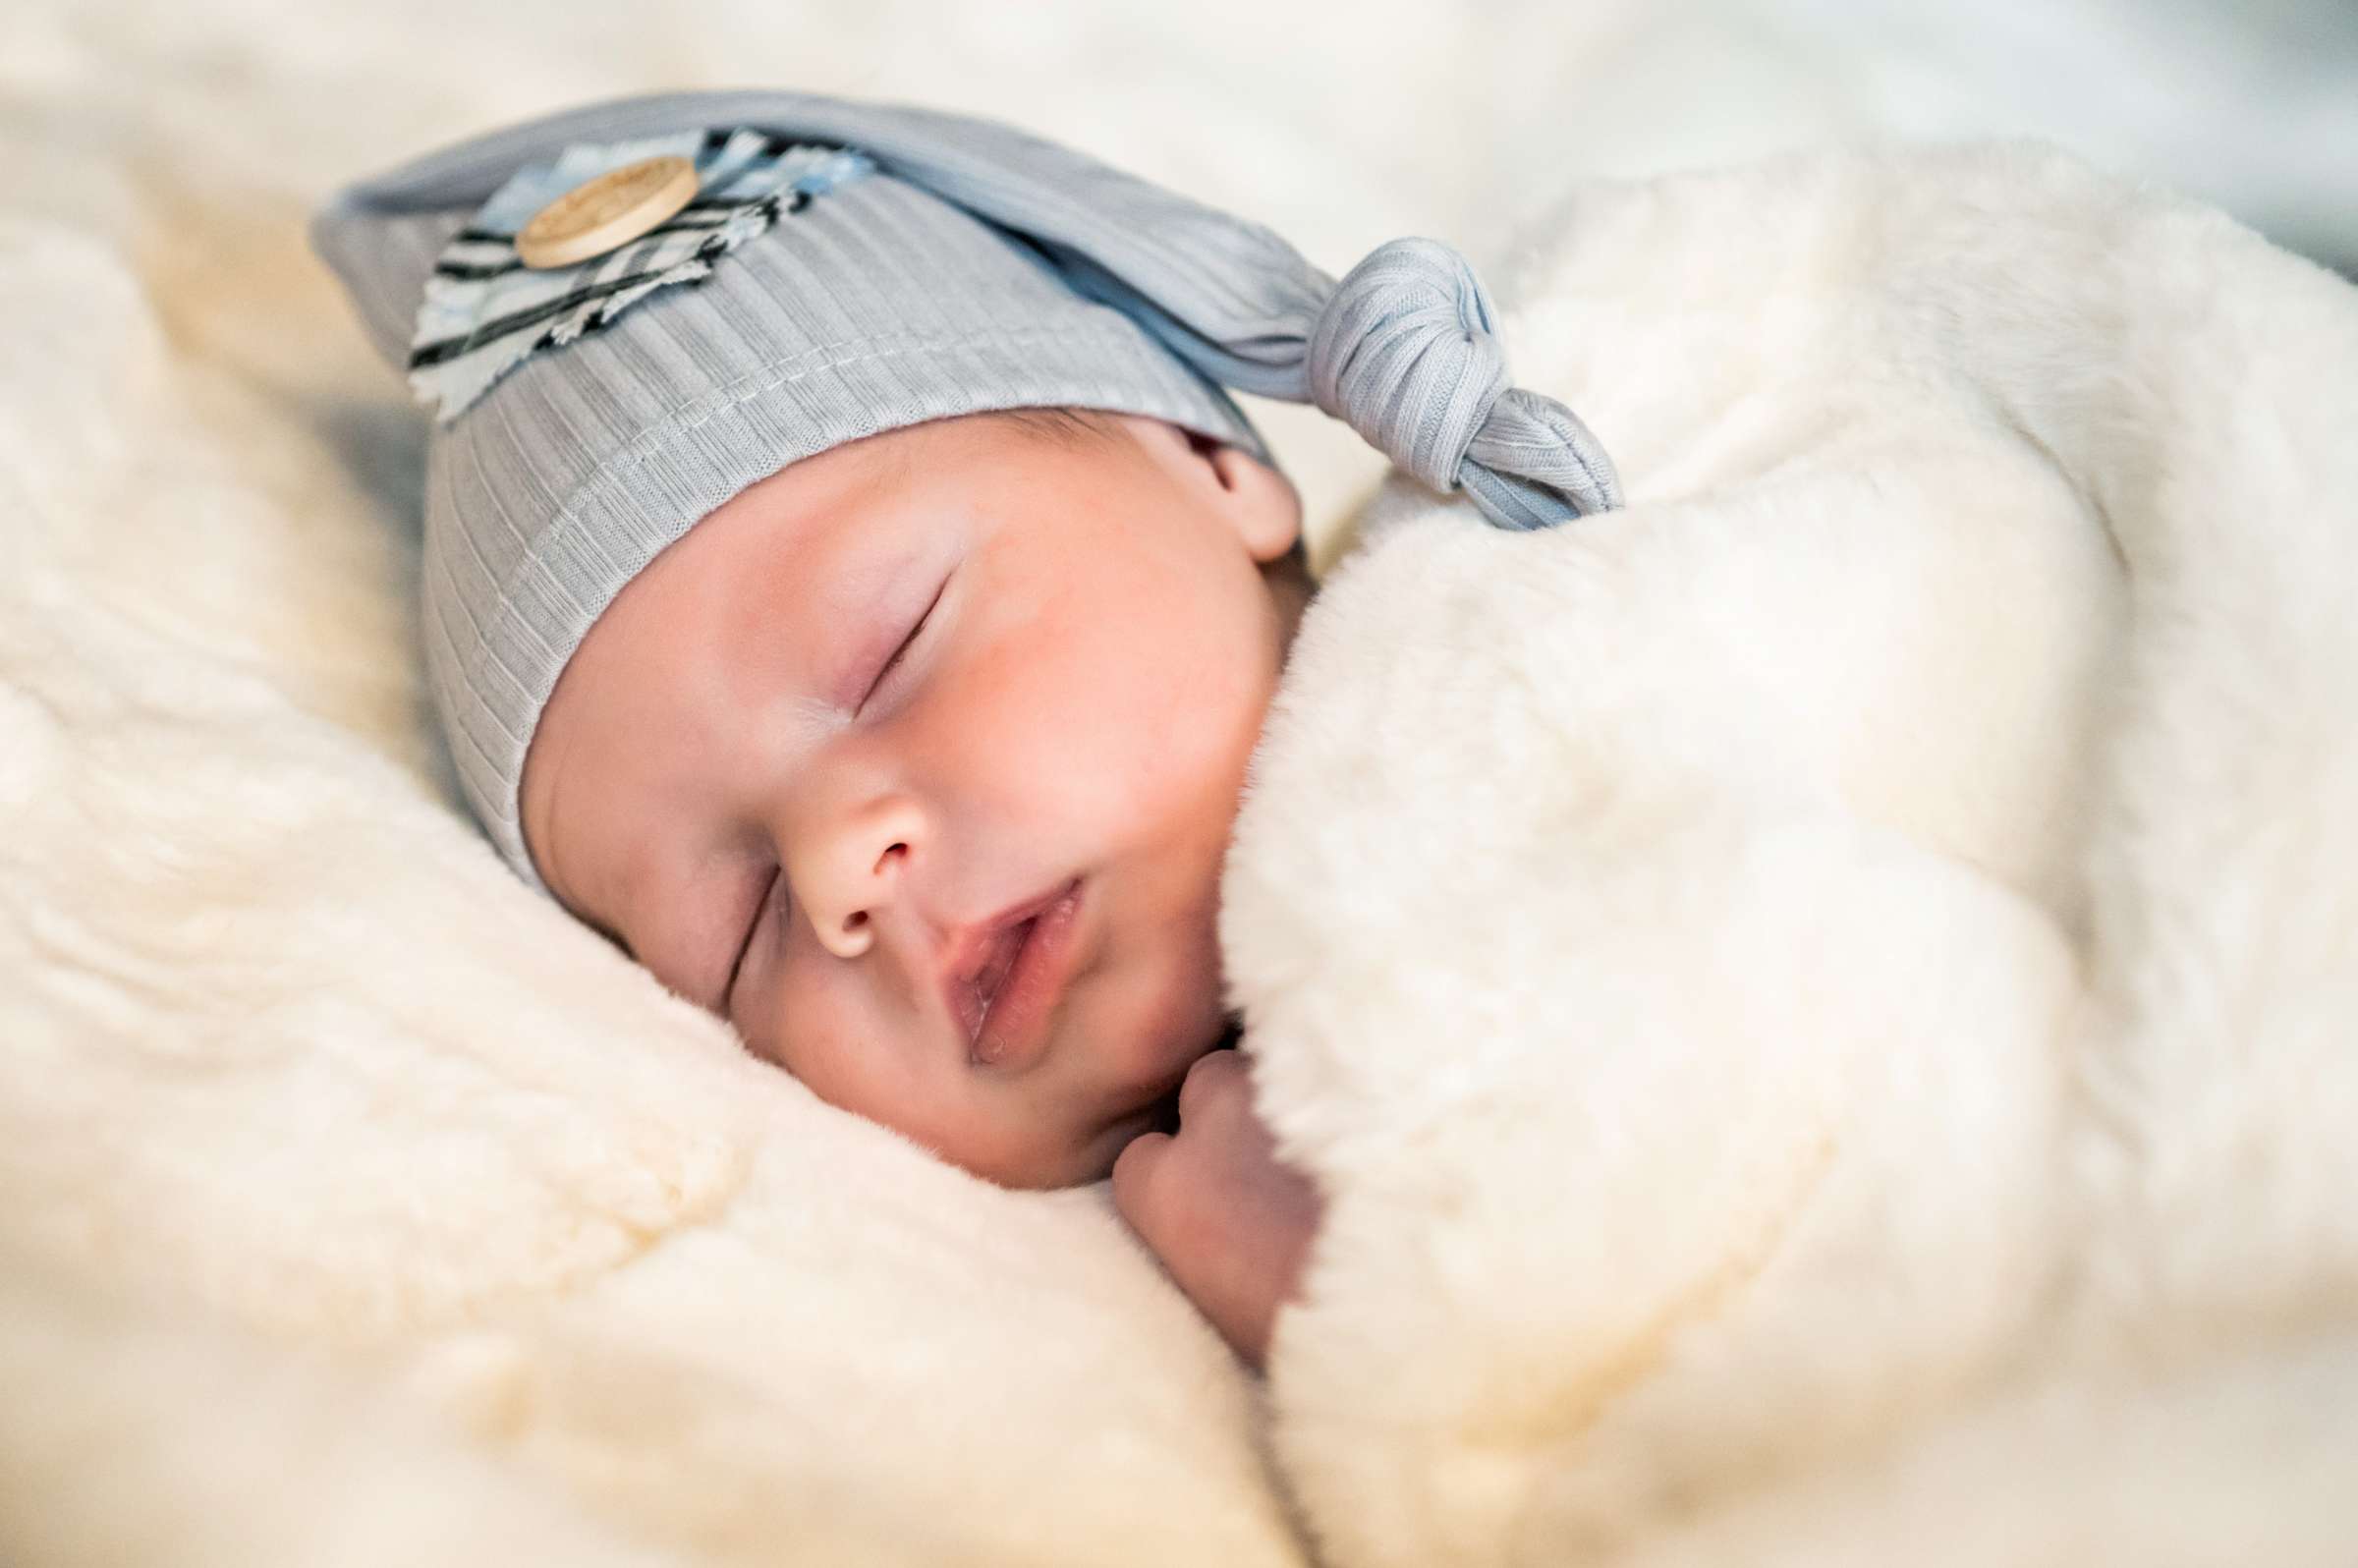 Newborn Photo Session, Gianna S. Newborn Photo #12 by True Photography